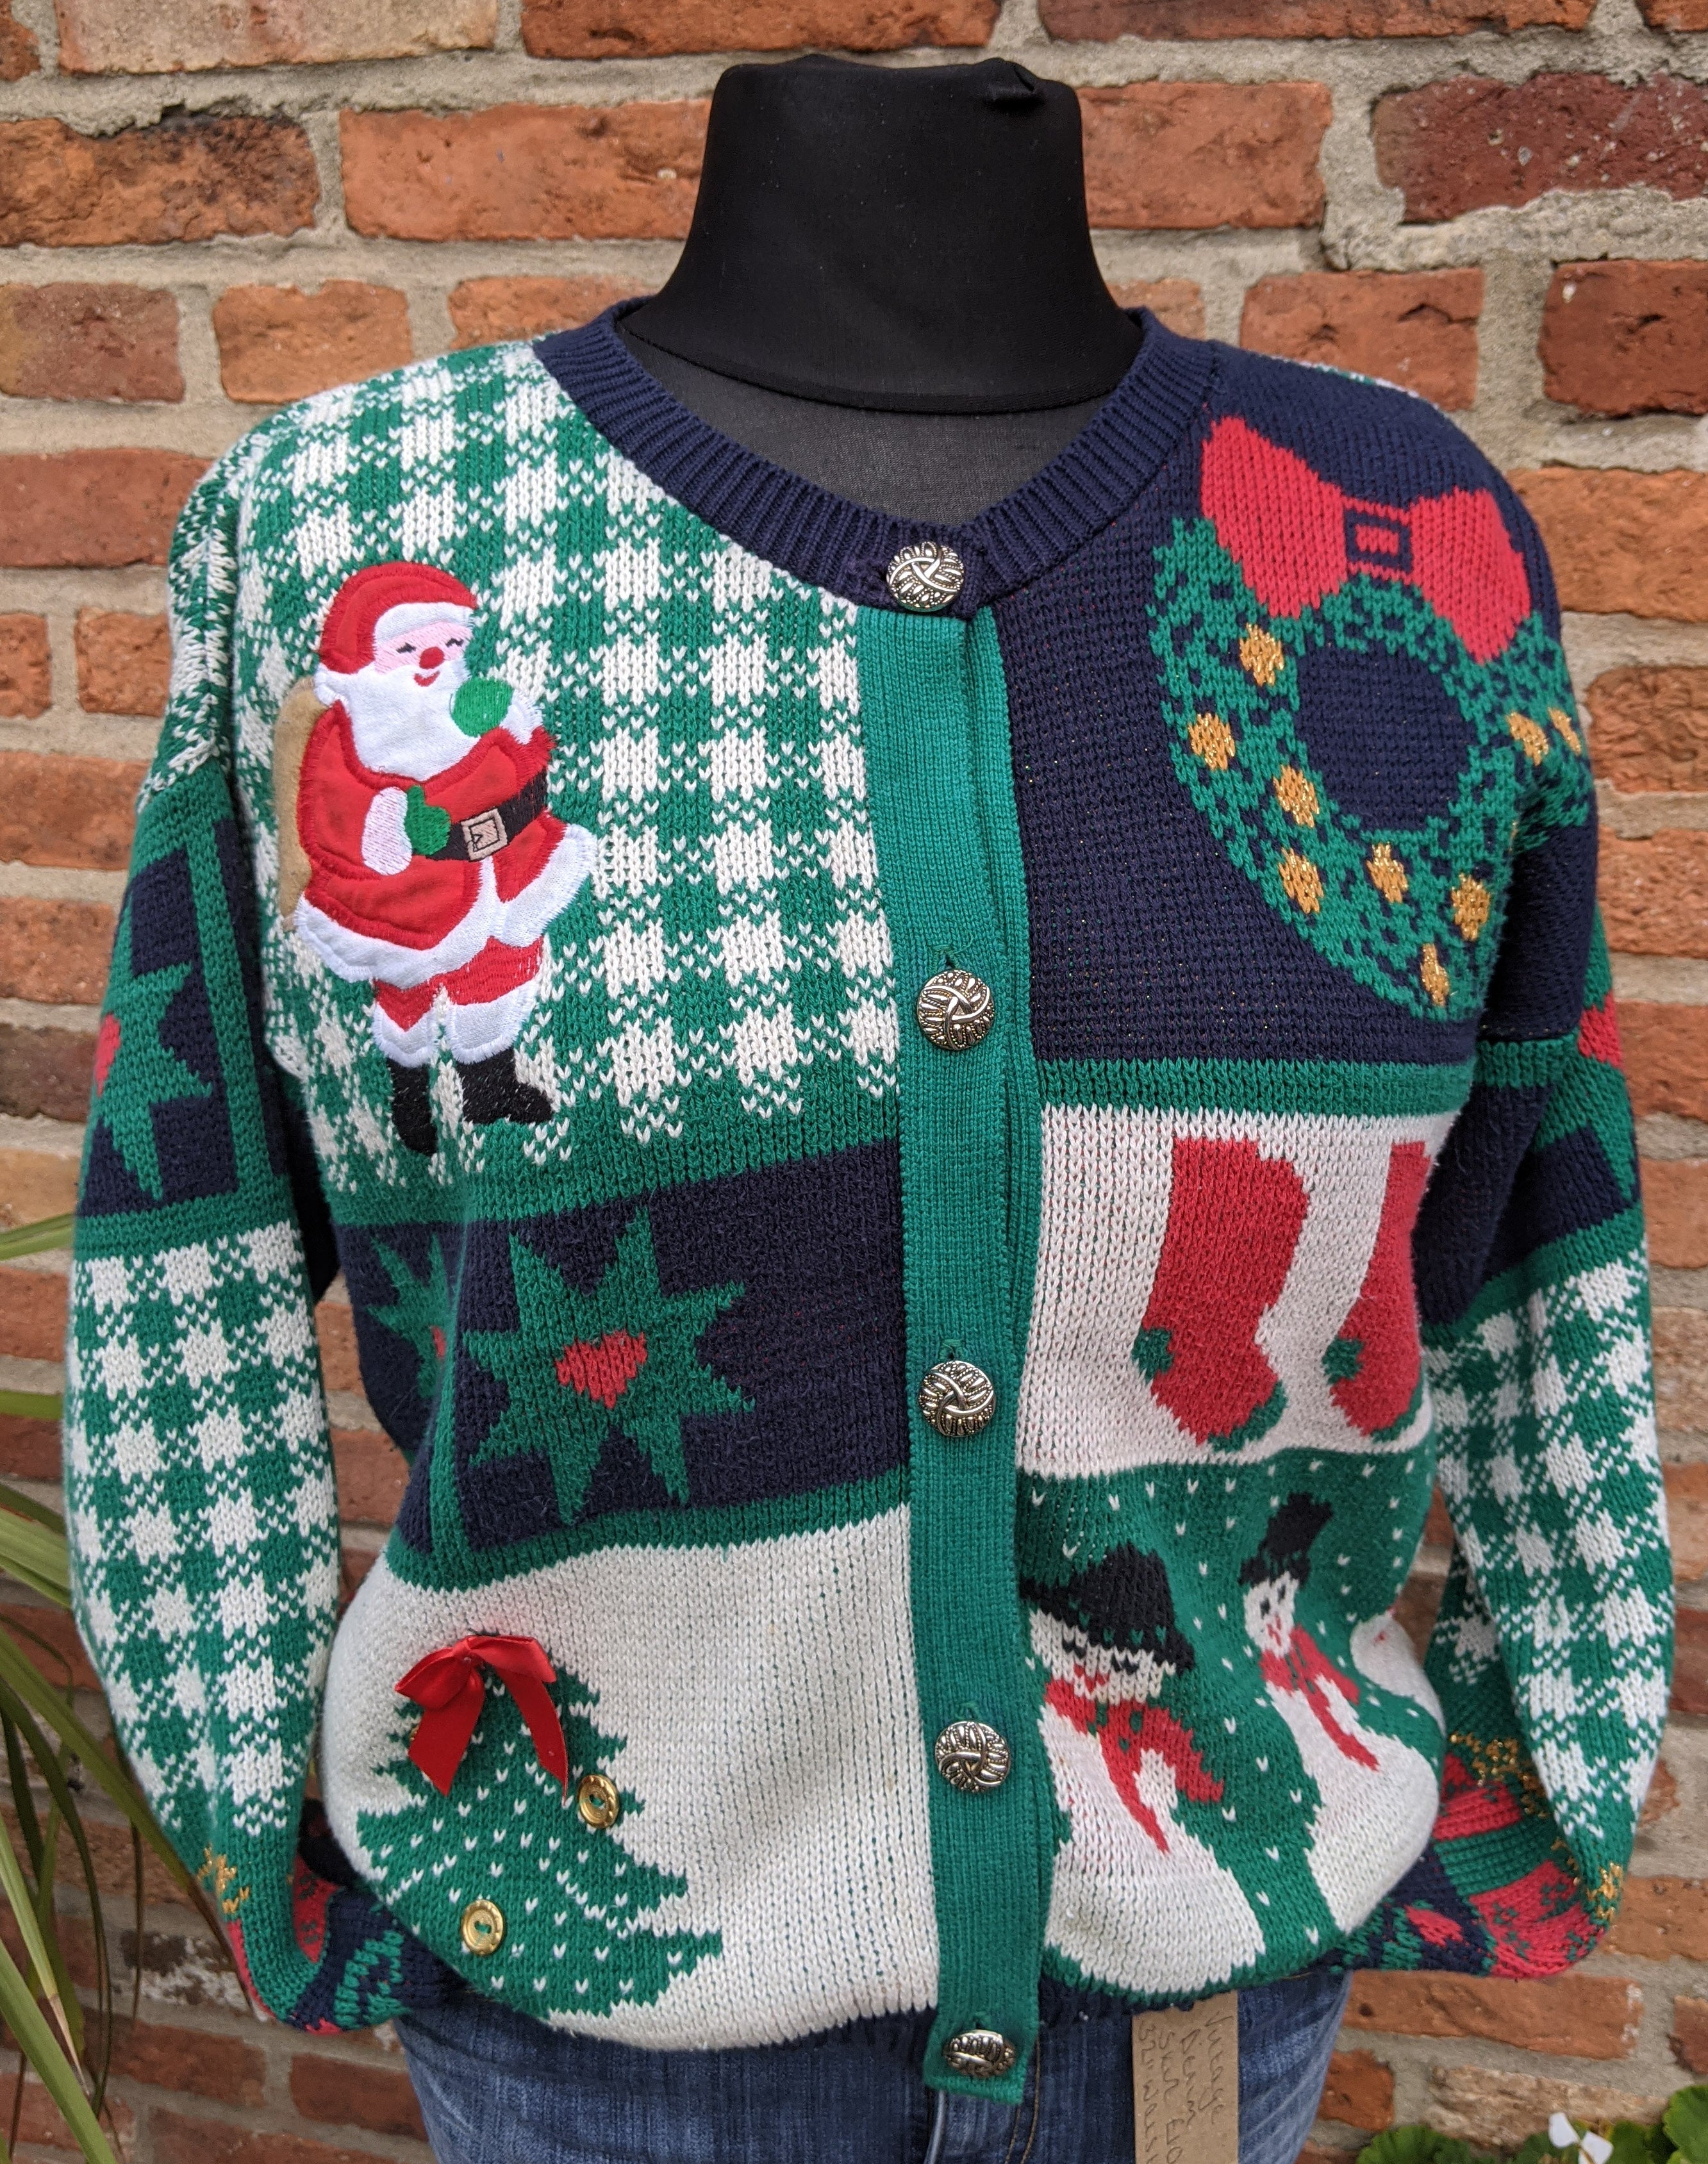 Stunning patterned Christmas cardigan size L item 884